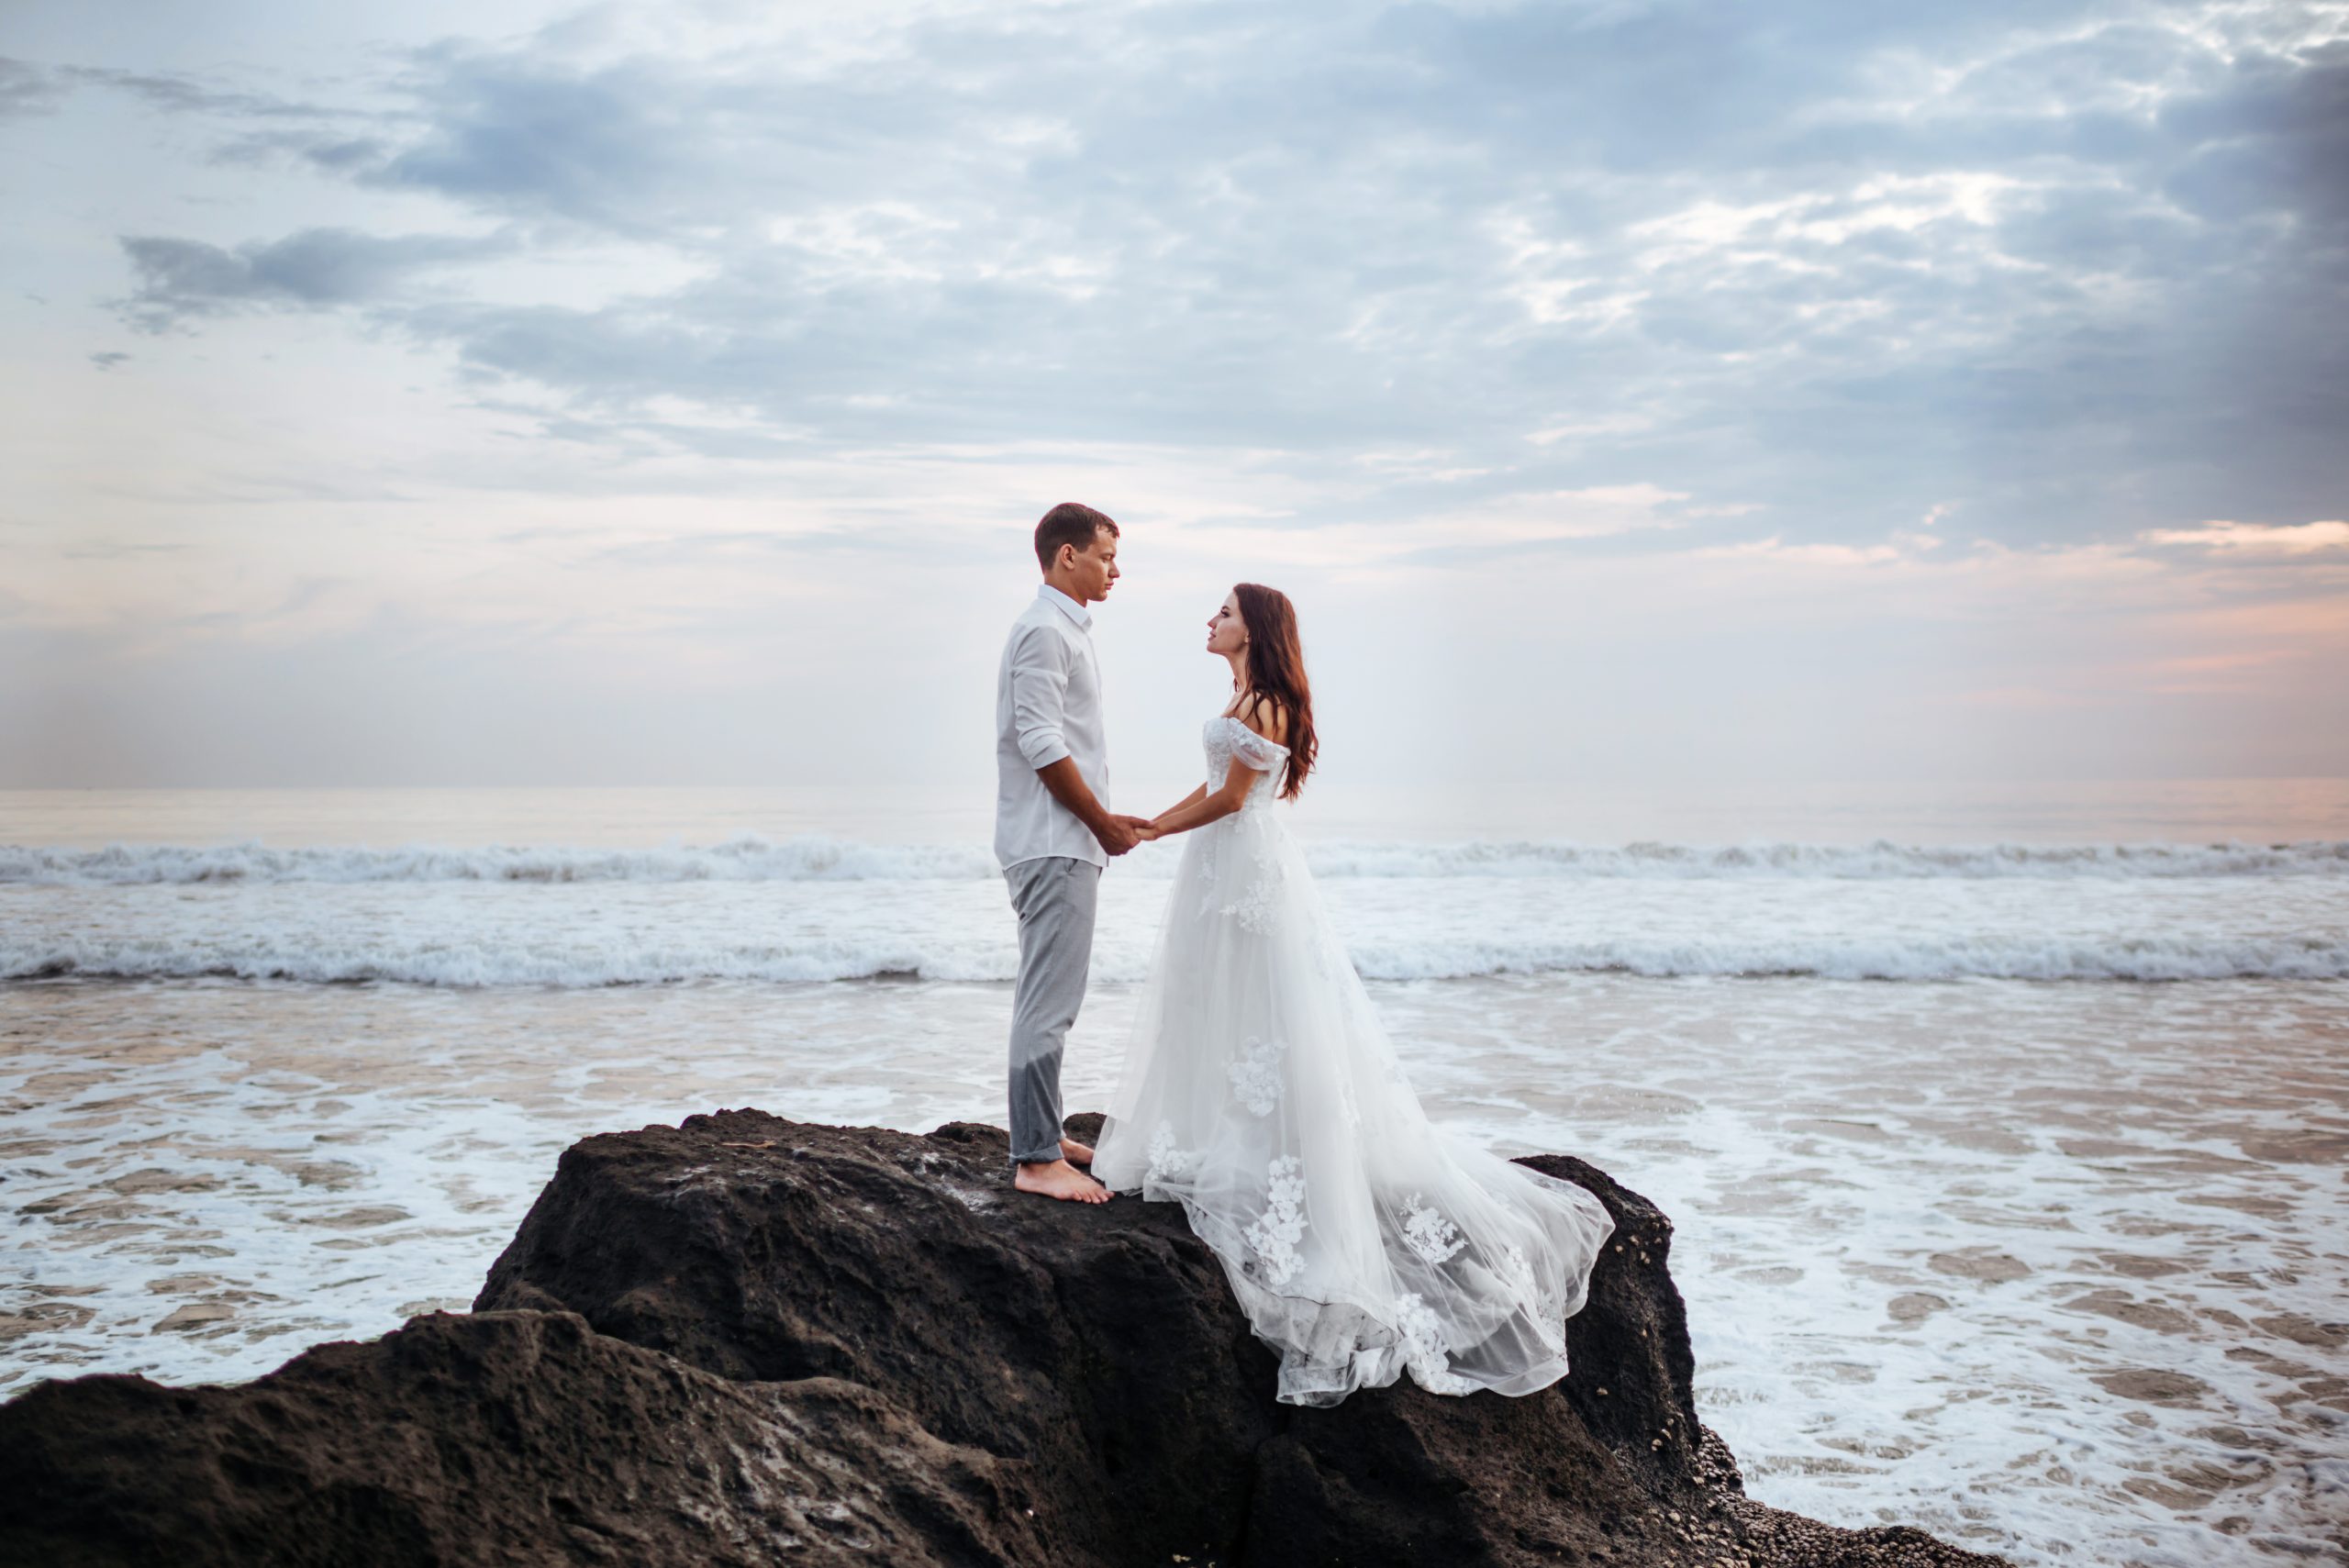 Saying "I do" wedding, ceremony, marriage, couple, family, beach, sea